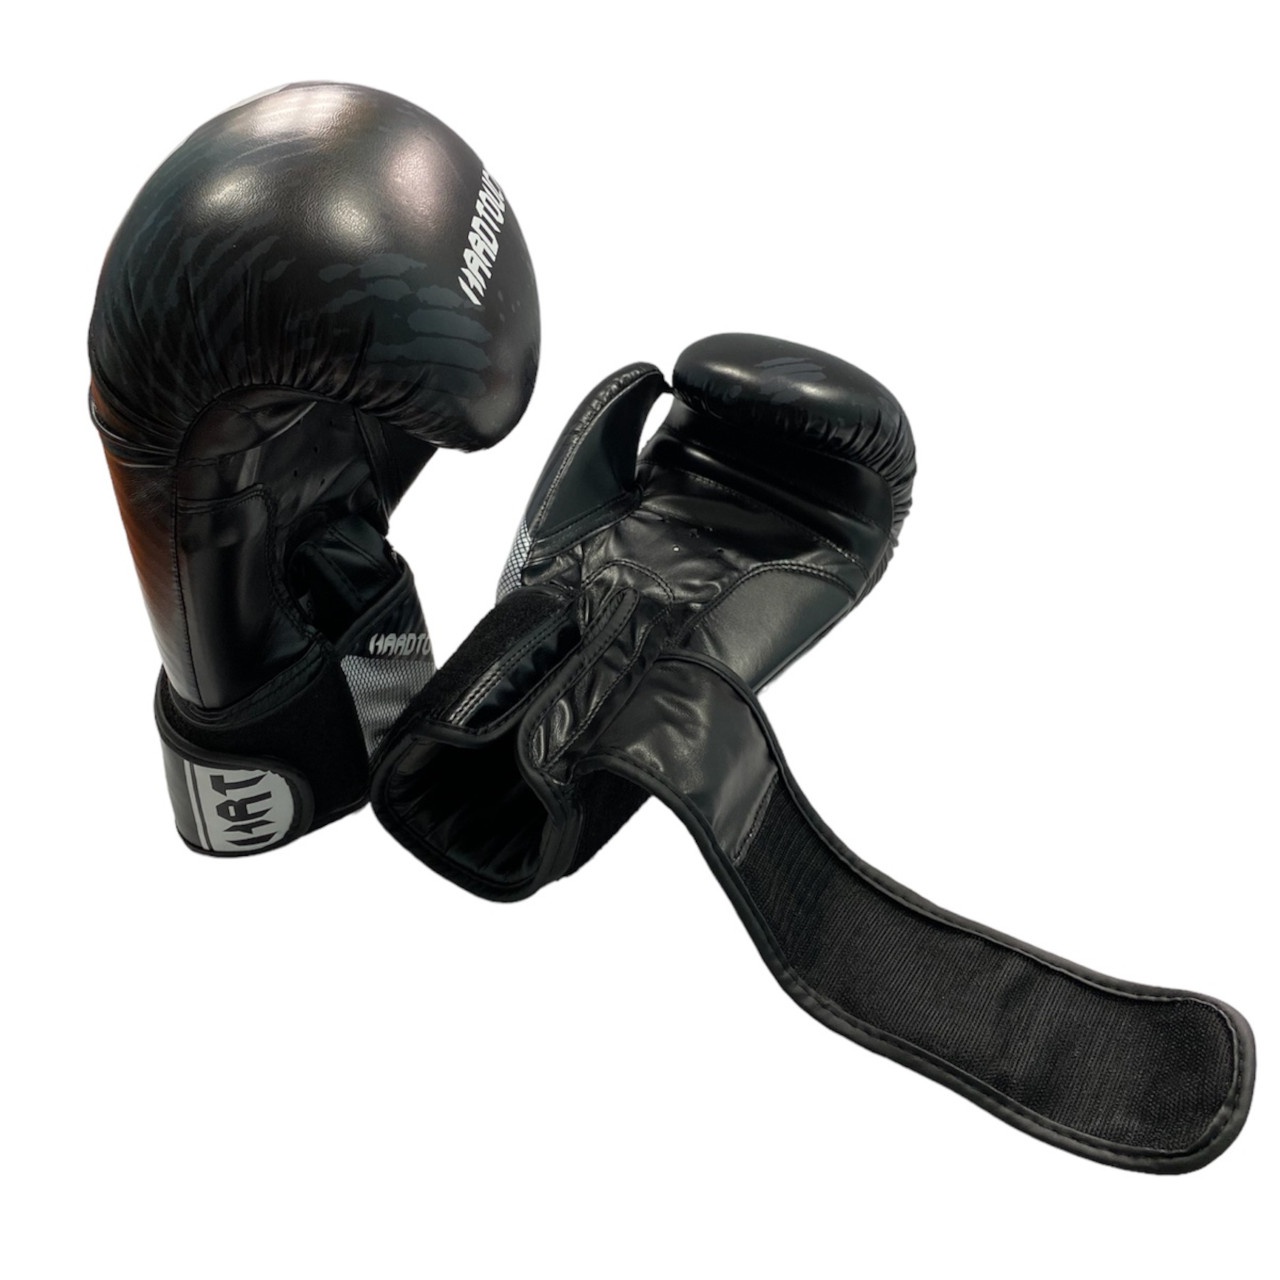 Перчатки боксерские PU на липучке HARD TOUCH 10 унций черные